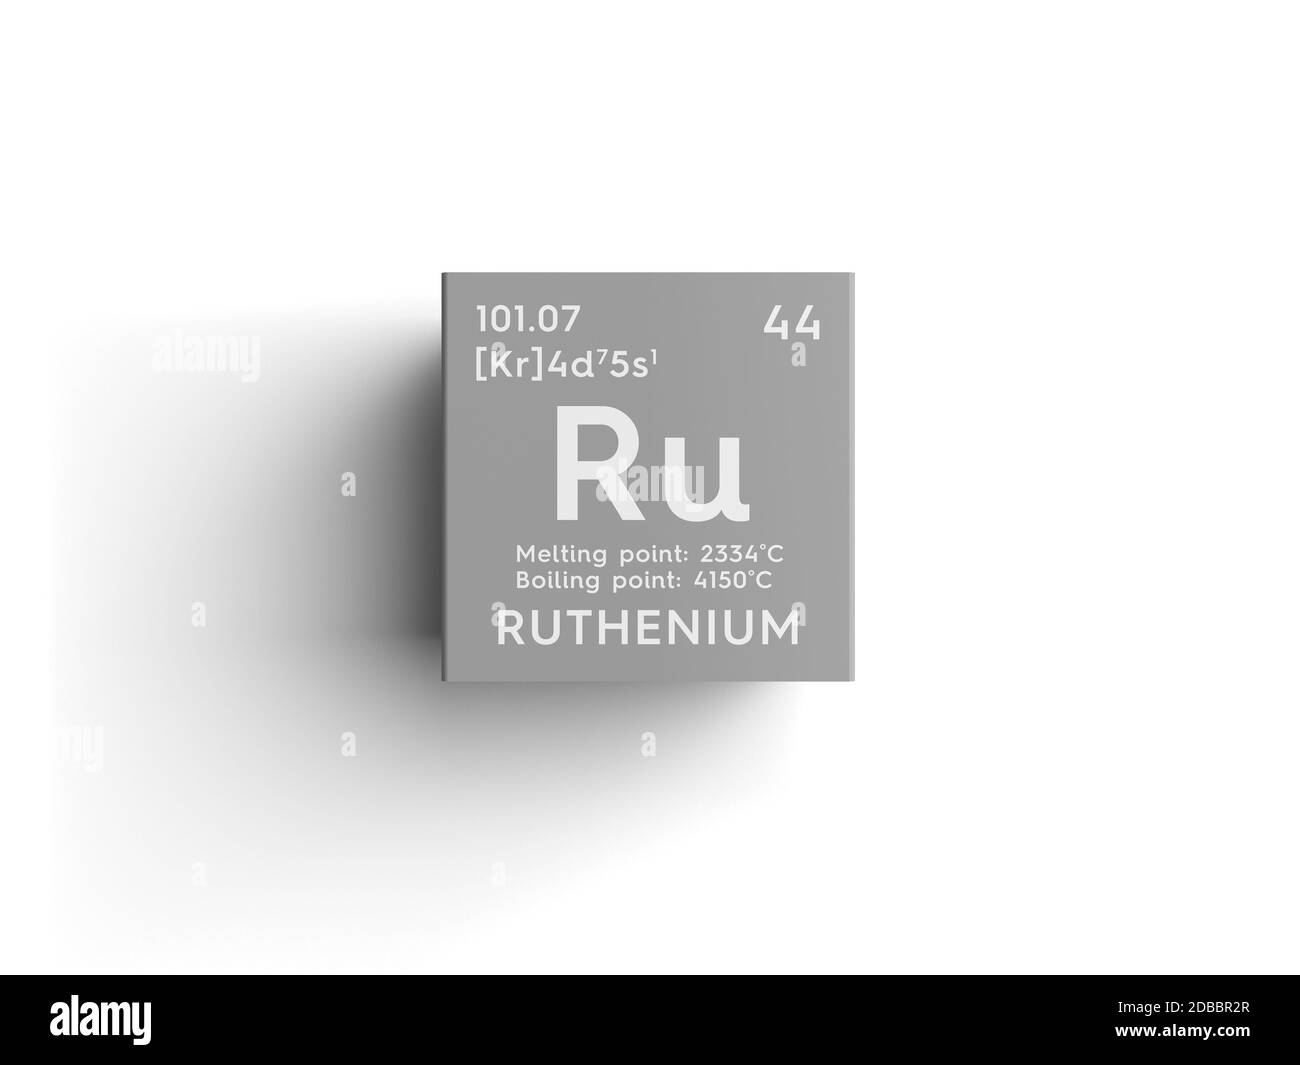 Ruthenium symbol Black and White Stock Photos & Images - Alamy